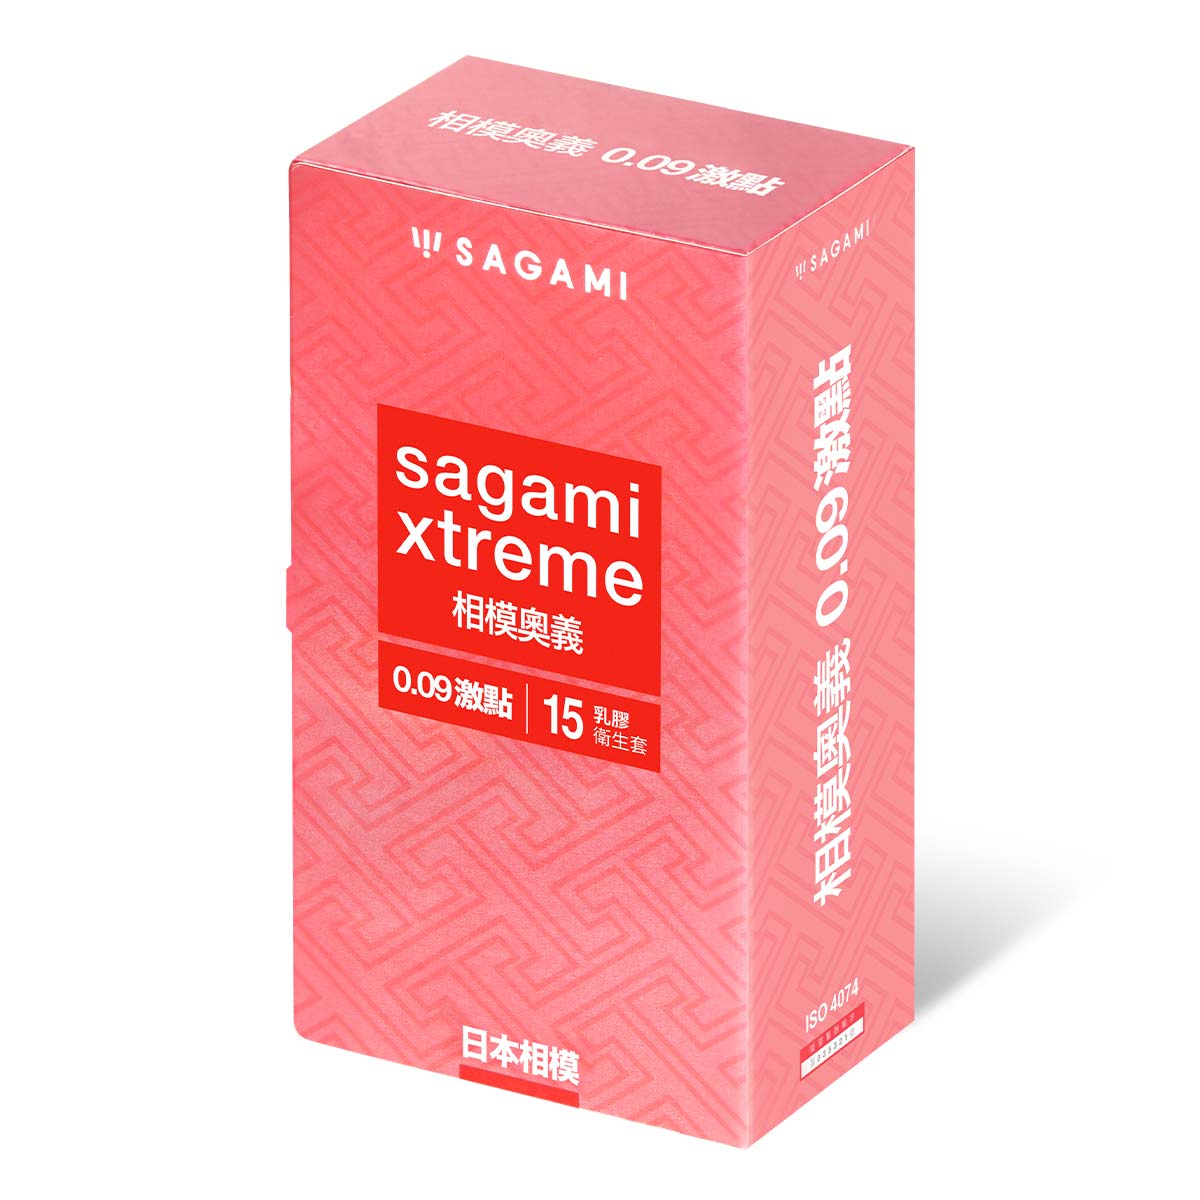 Sagami Xtreme Feel Long 15's Pack Latex Condom-p_1